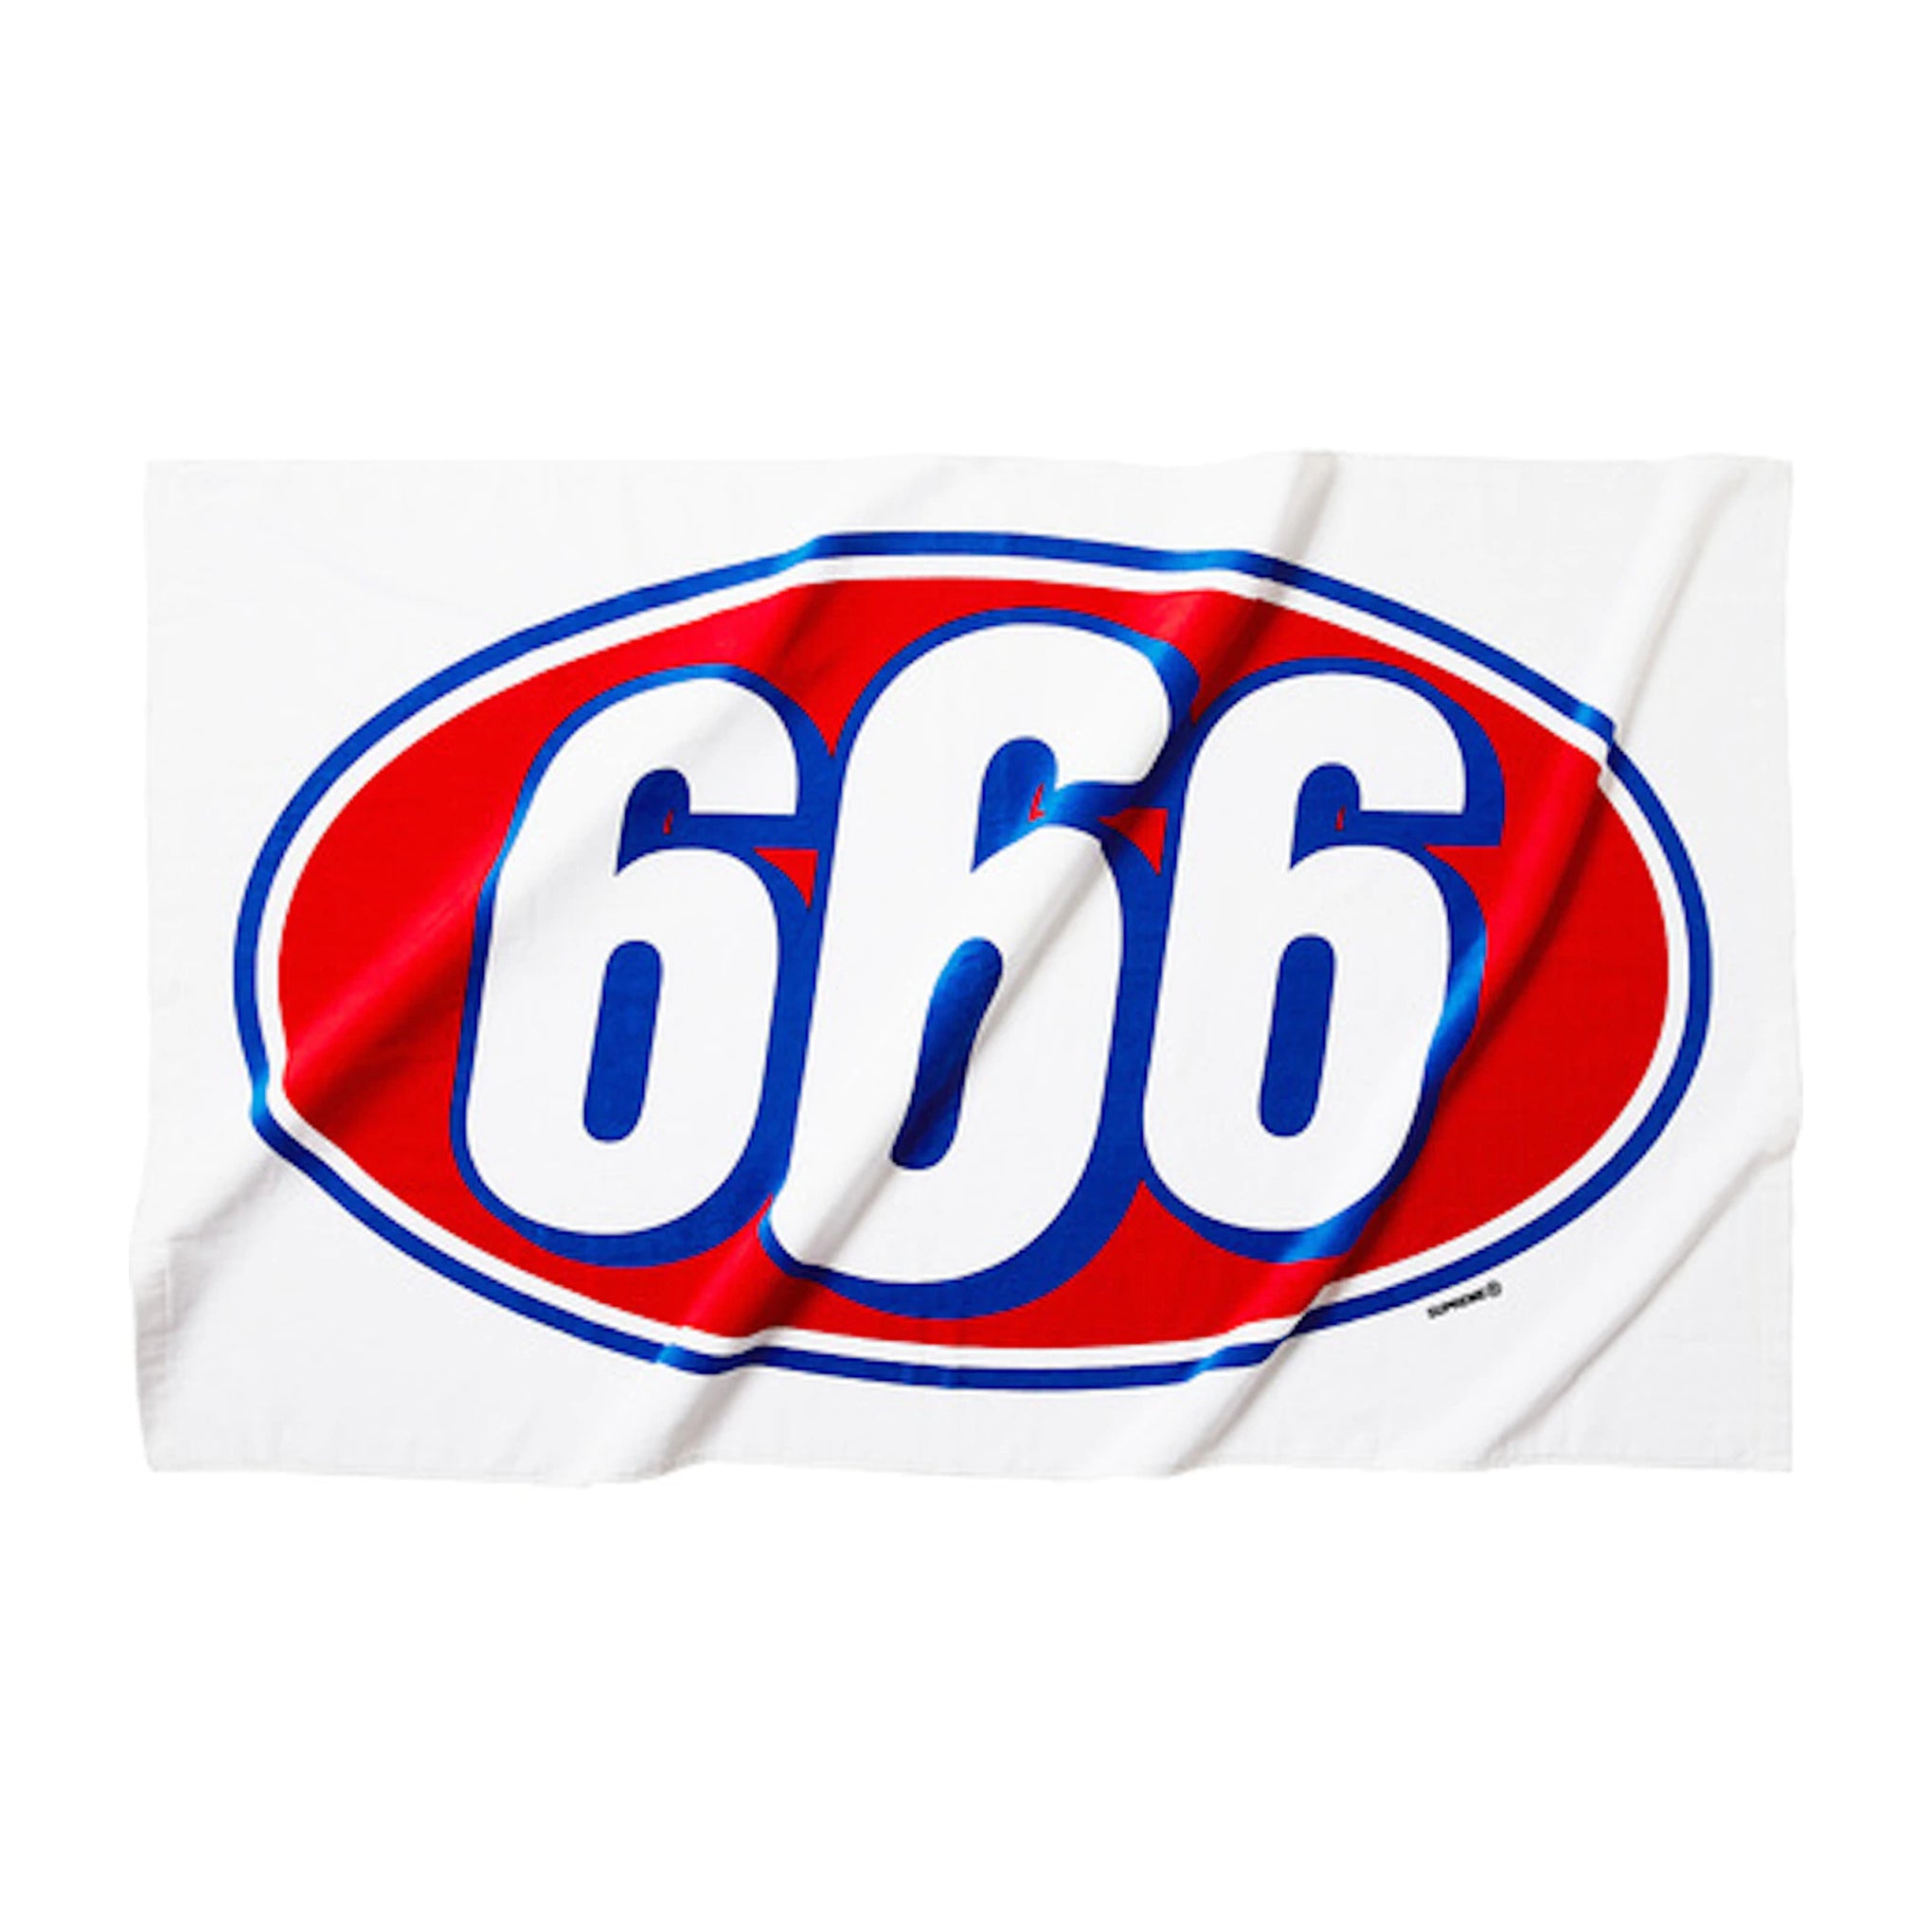 SUPREME 666 TOWEL WHITE